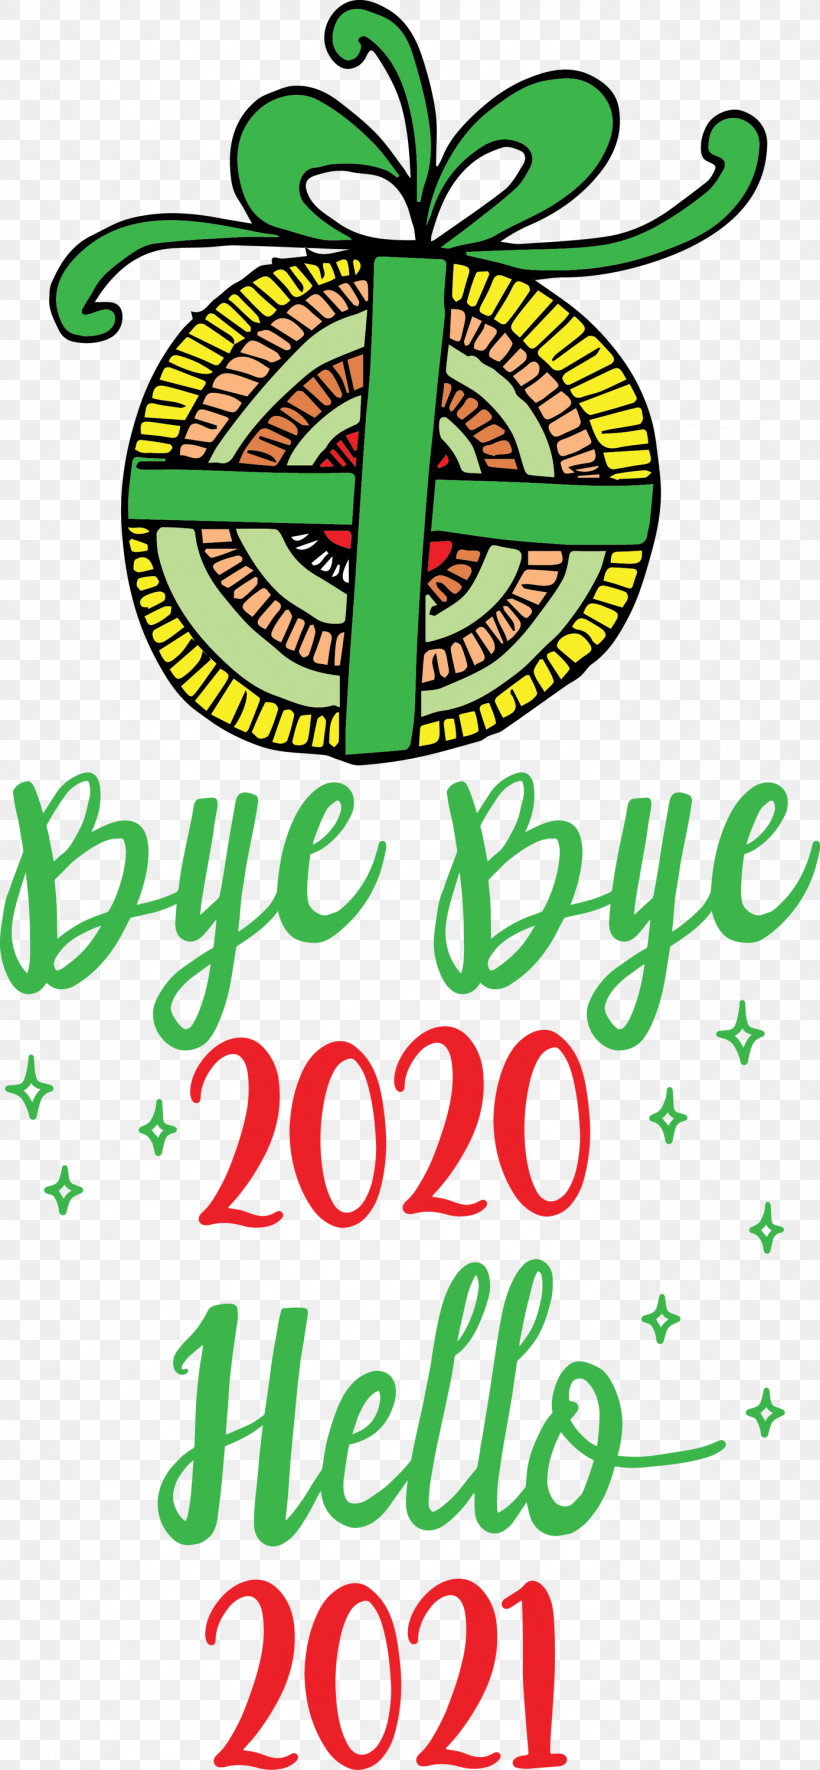 Hello 2021 Year Bye Bye 2020 Year, PNG, 1389x2999px, Hello 2021 Year, Bye Bye 2020 Year, Fruit, Leaf, Line Download Free